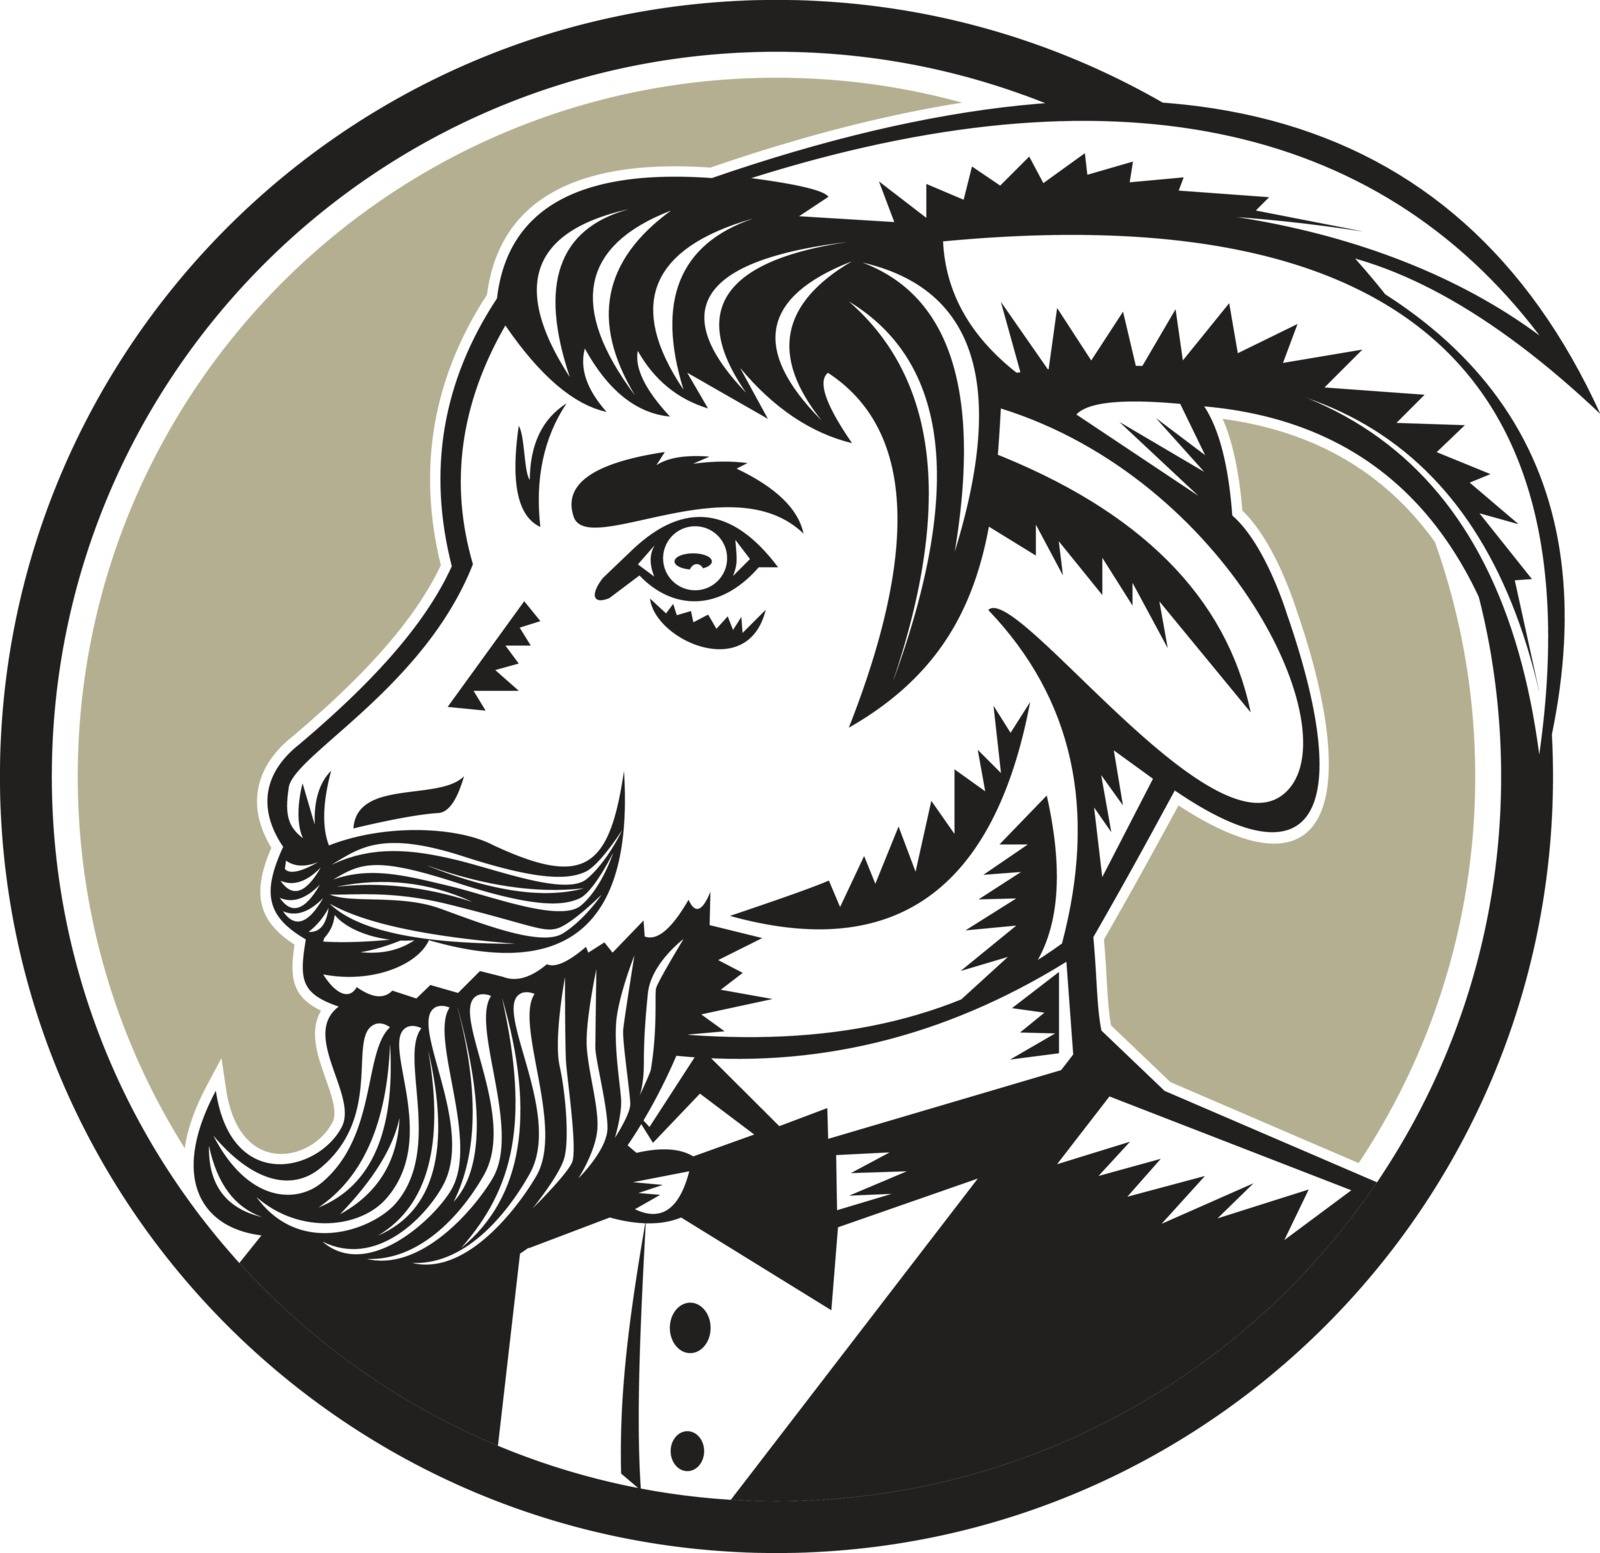 Goat Beard Tuxedo Circle Woodcut by patrimonio